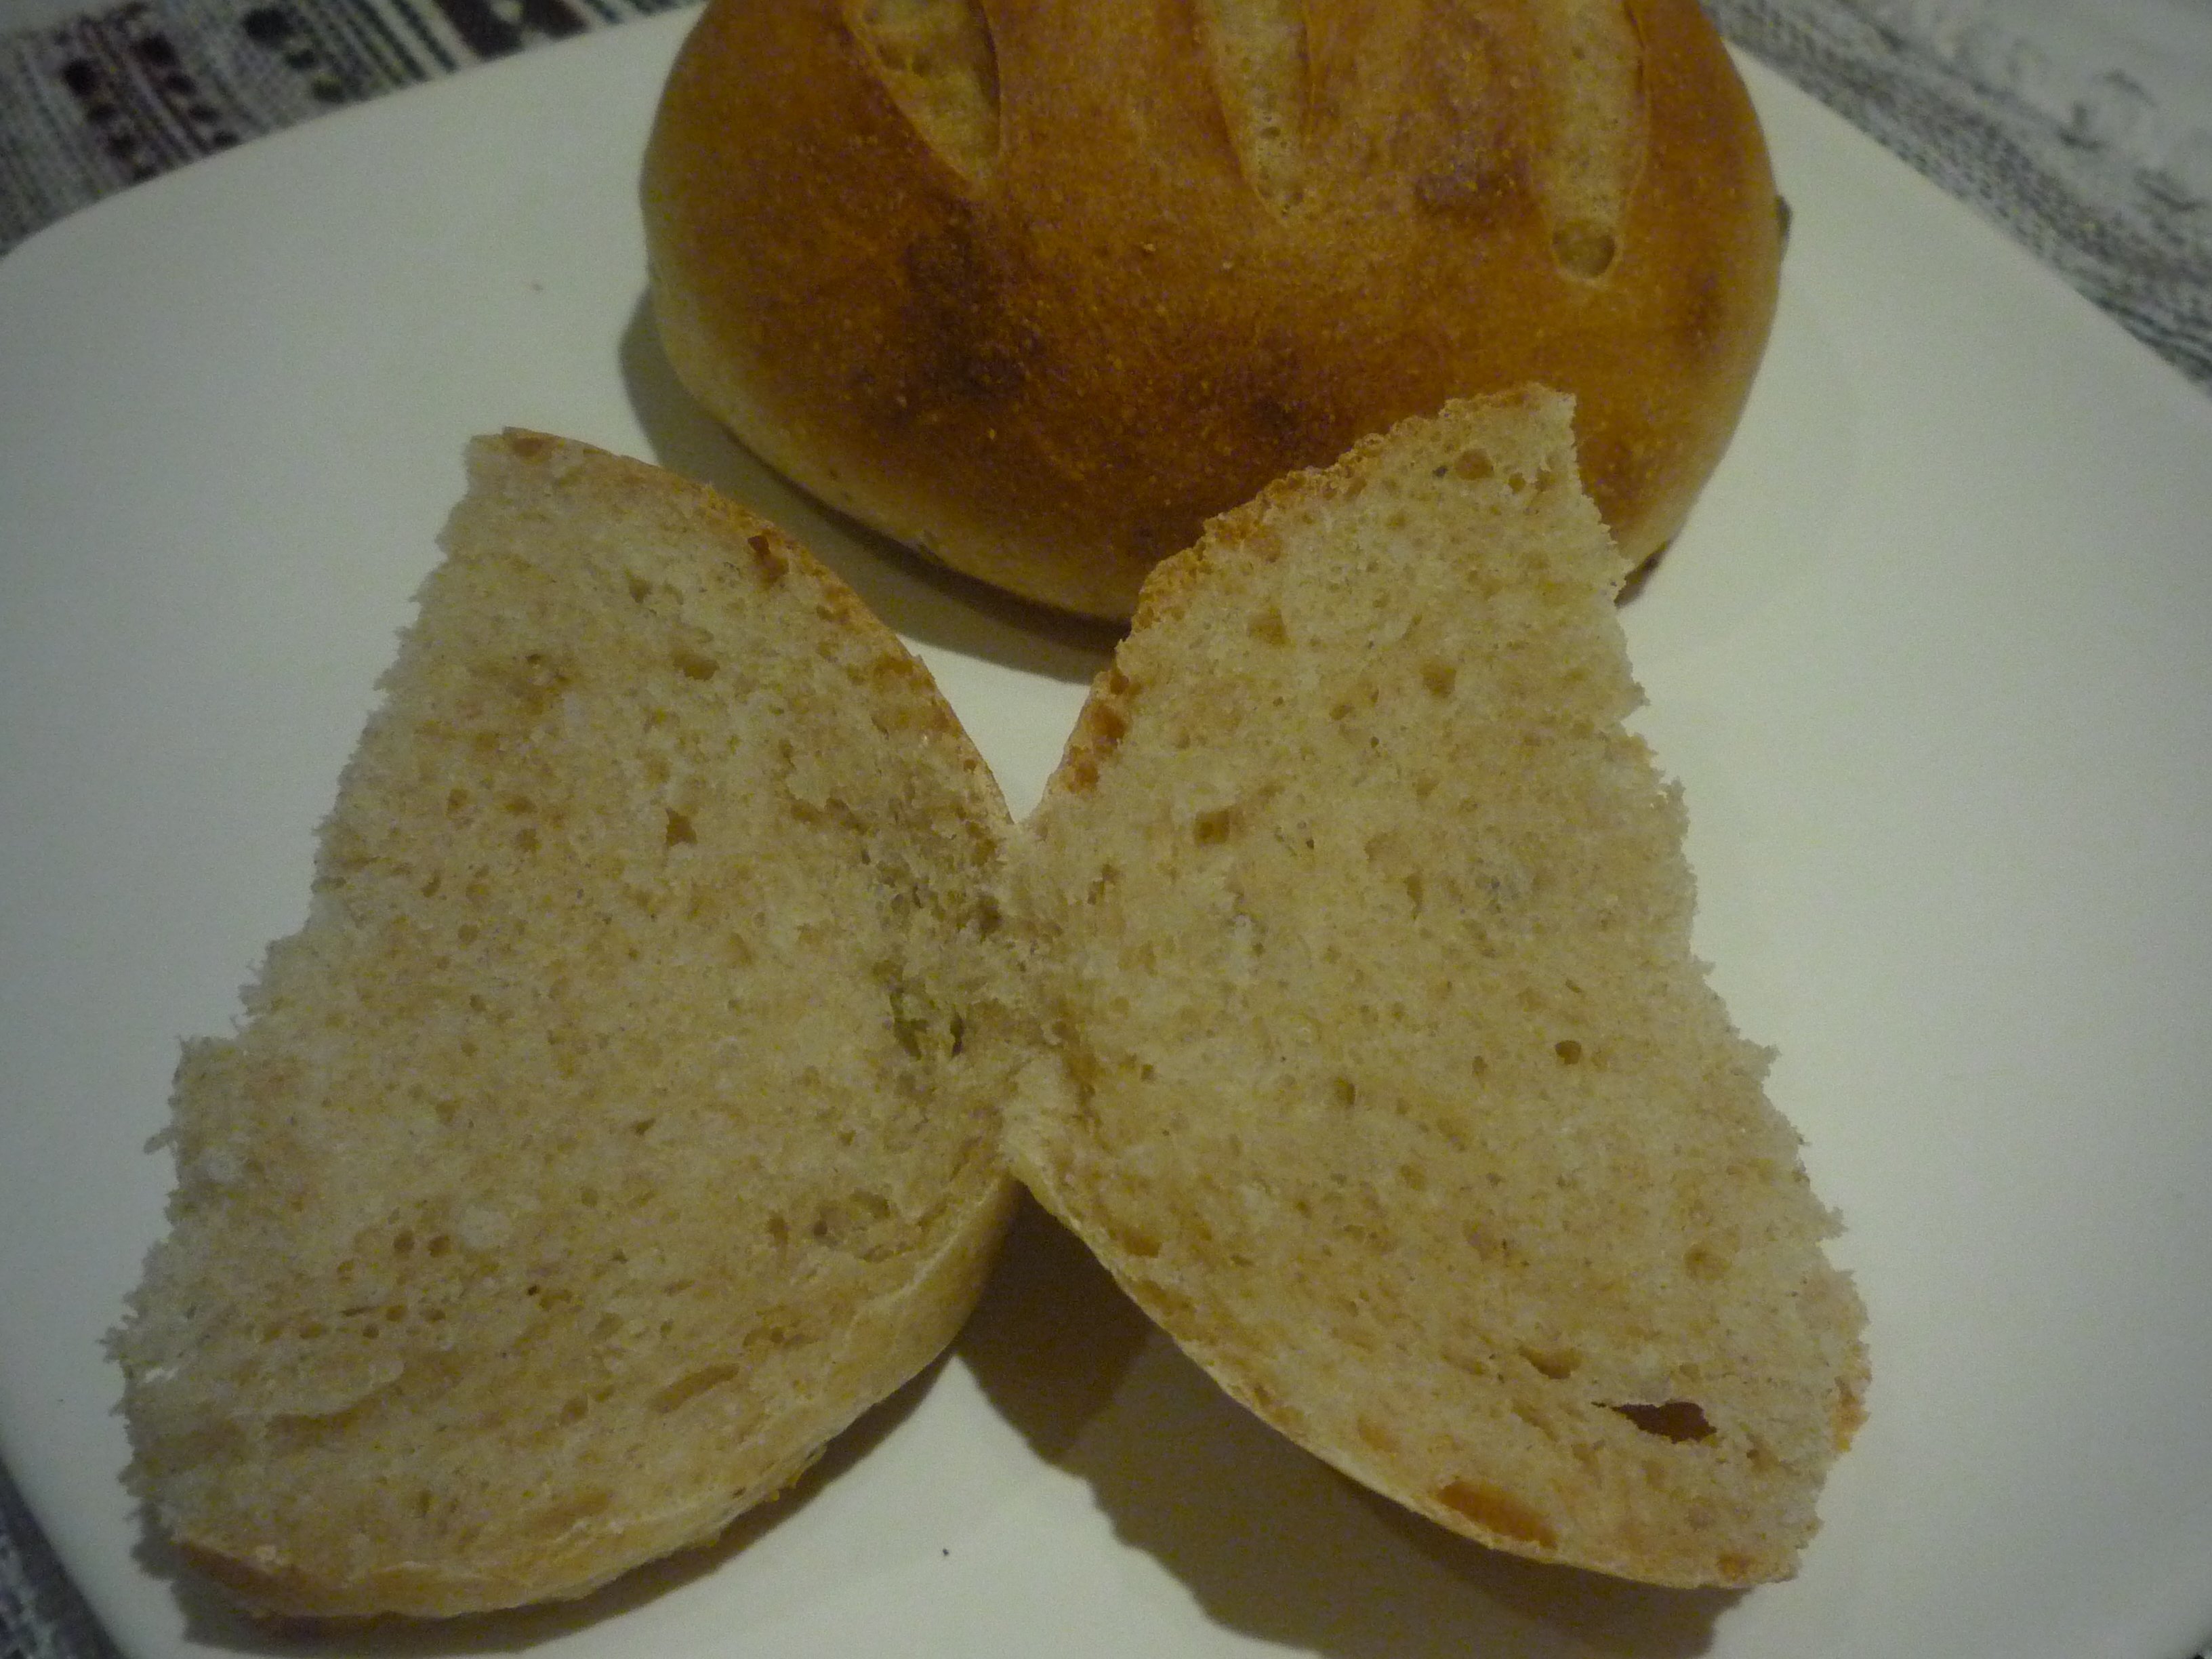 Buns with whole grain flour, honey and lavender (R. Bertine)